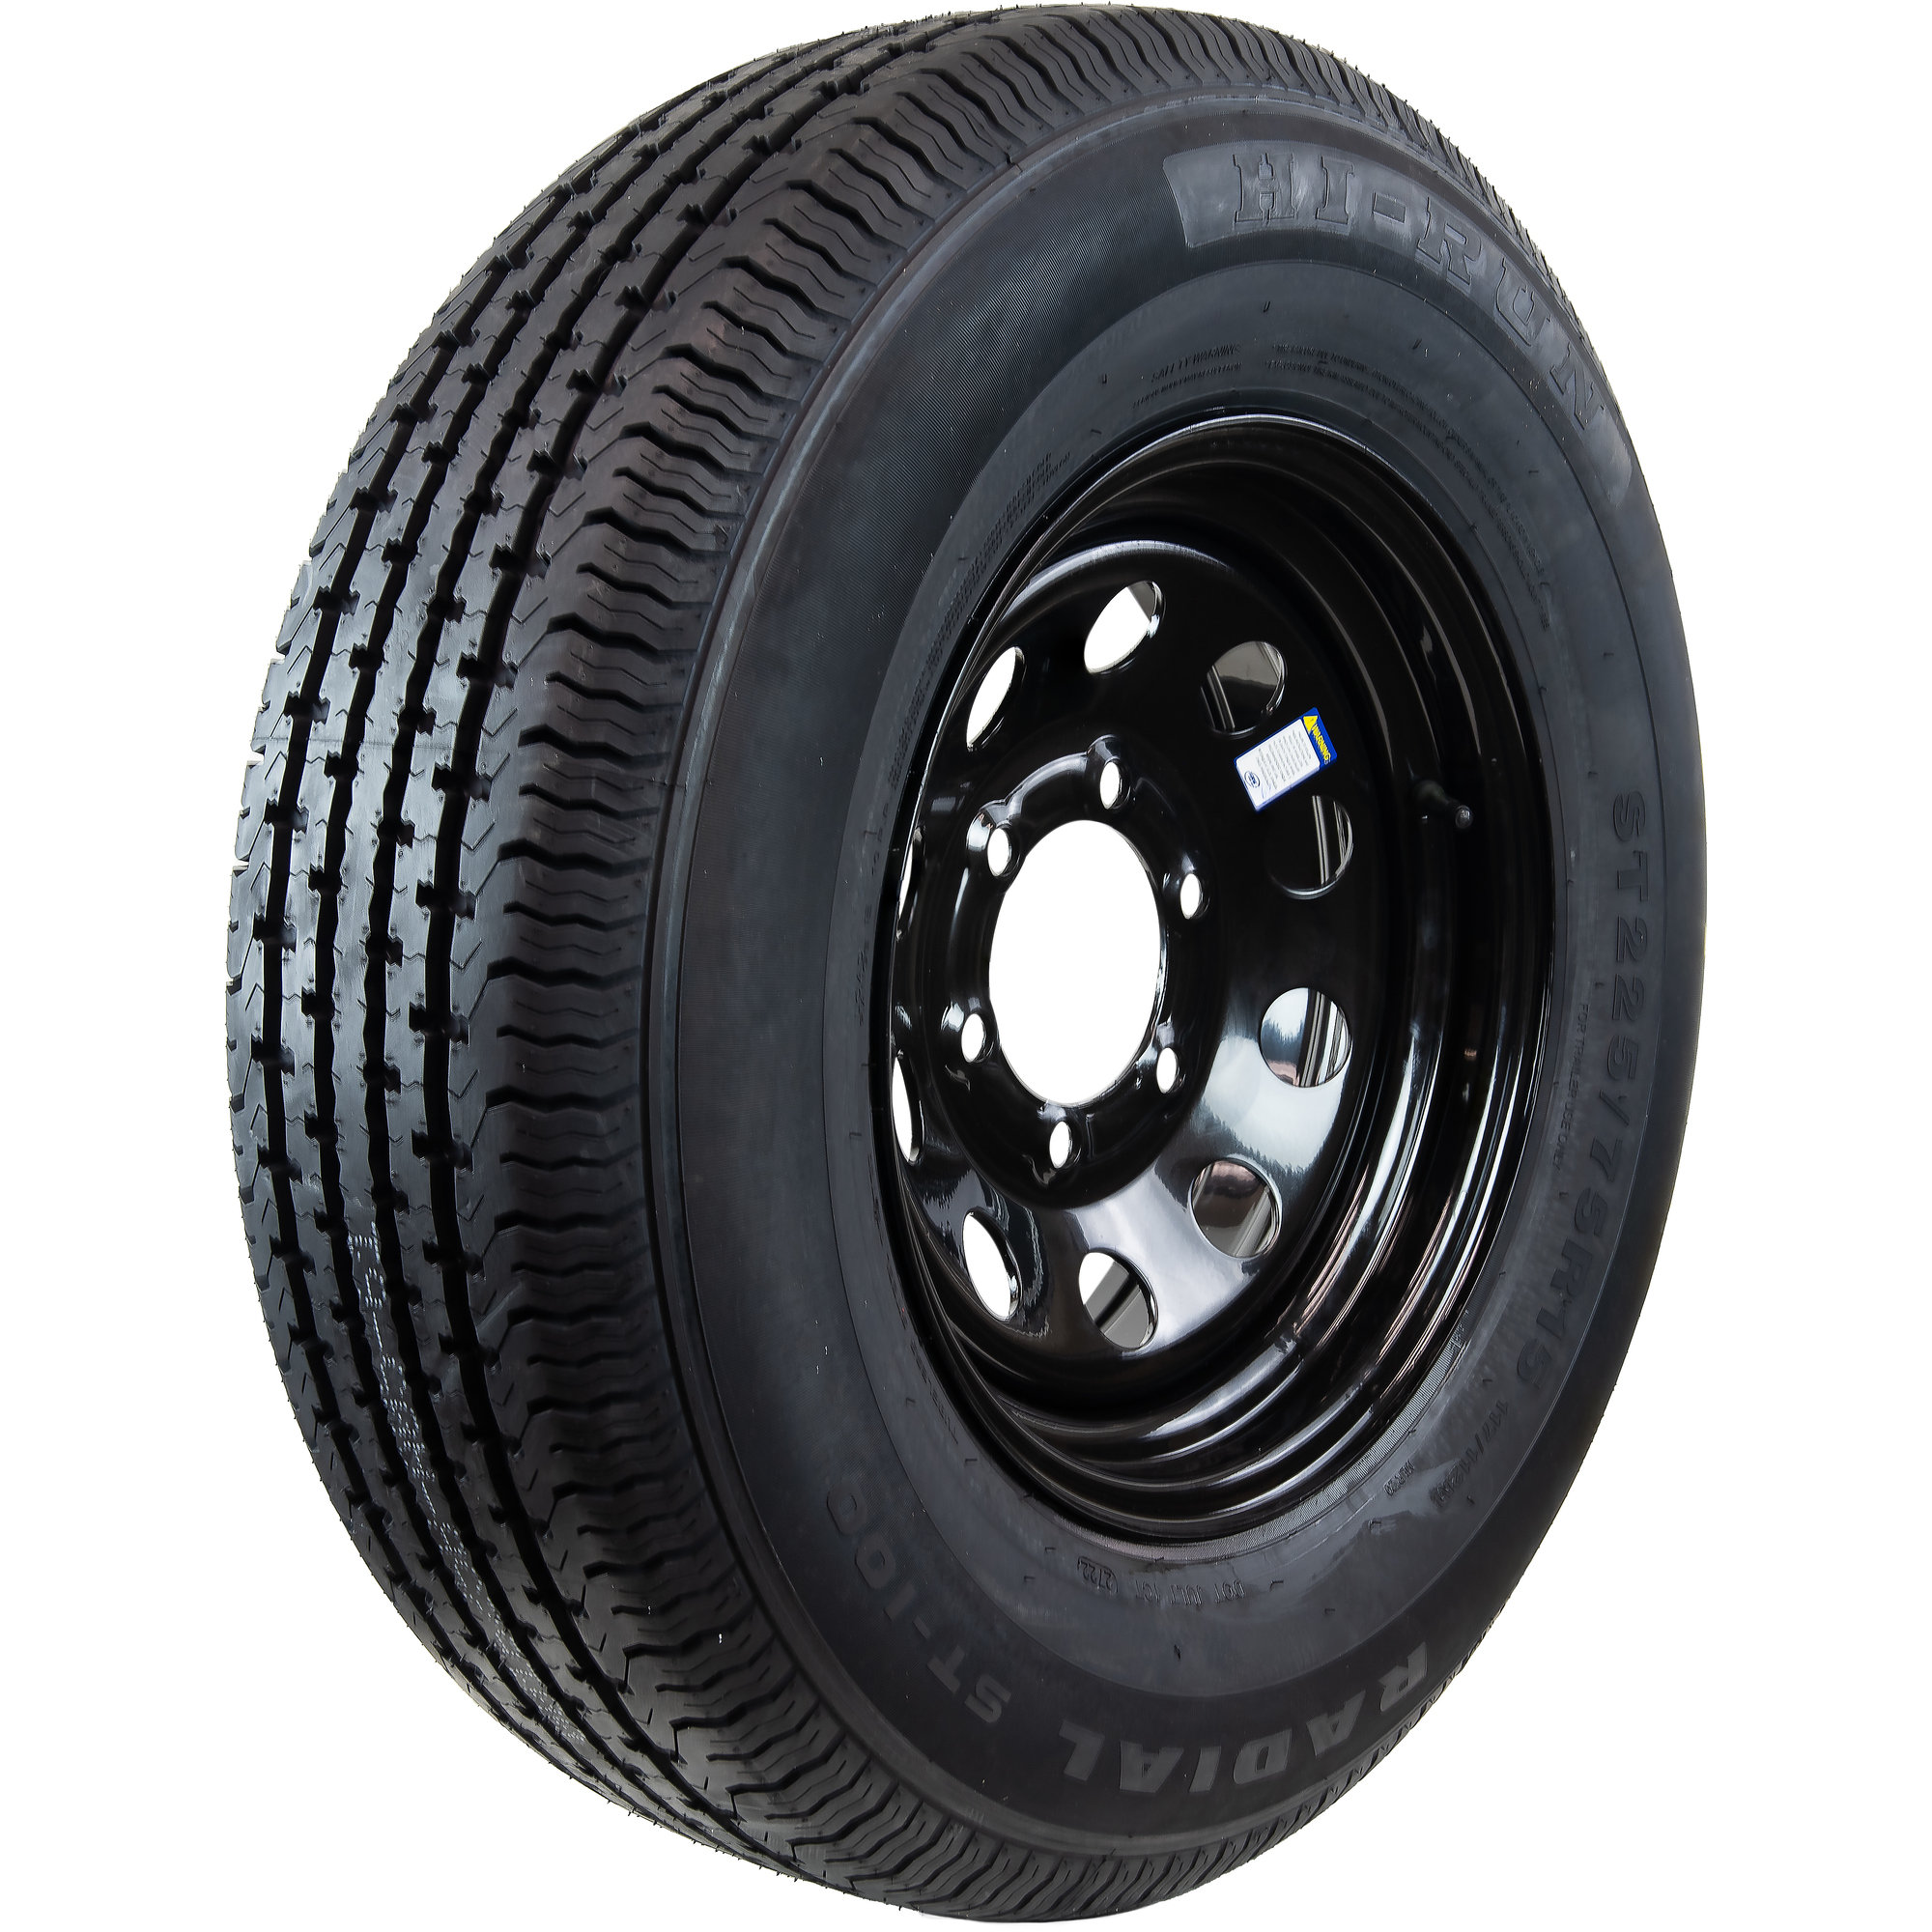 HI-RUN, Highway Trailer Tire Assembly, Radial, Black Mod, Tire Size ST225/75R15 Load Range Rating E, Bolt Holes (qty.) 6 Model ASR2120